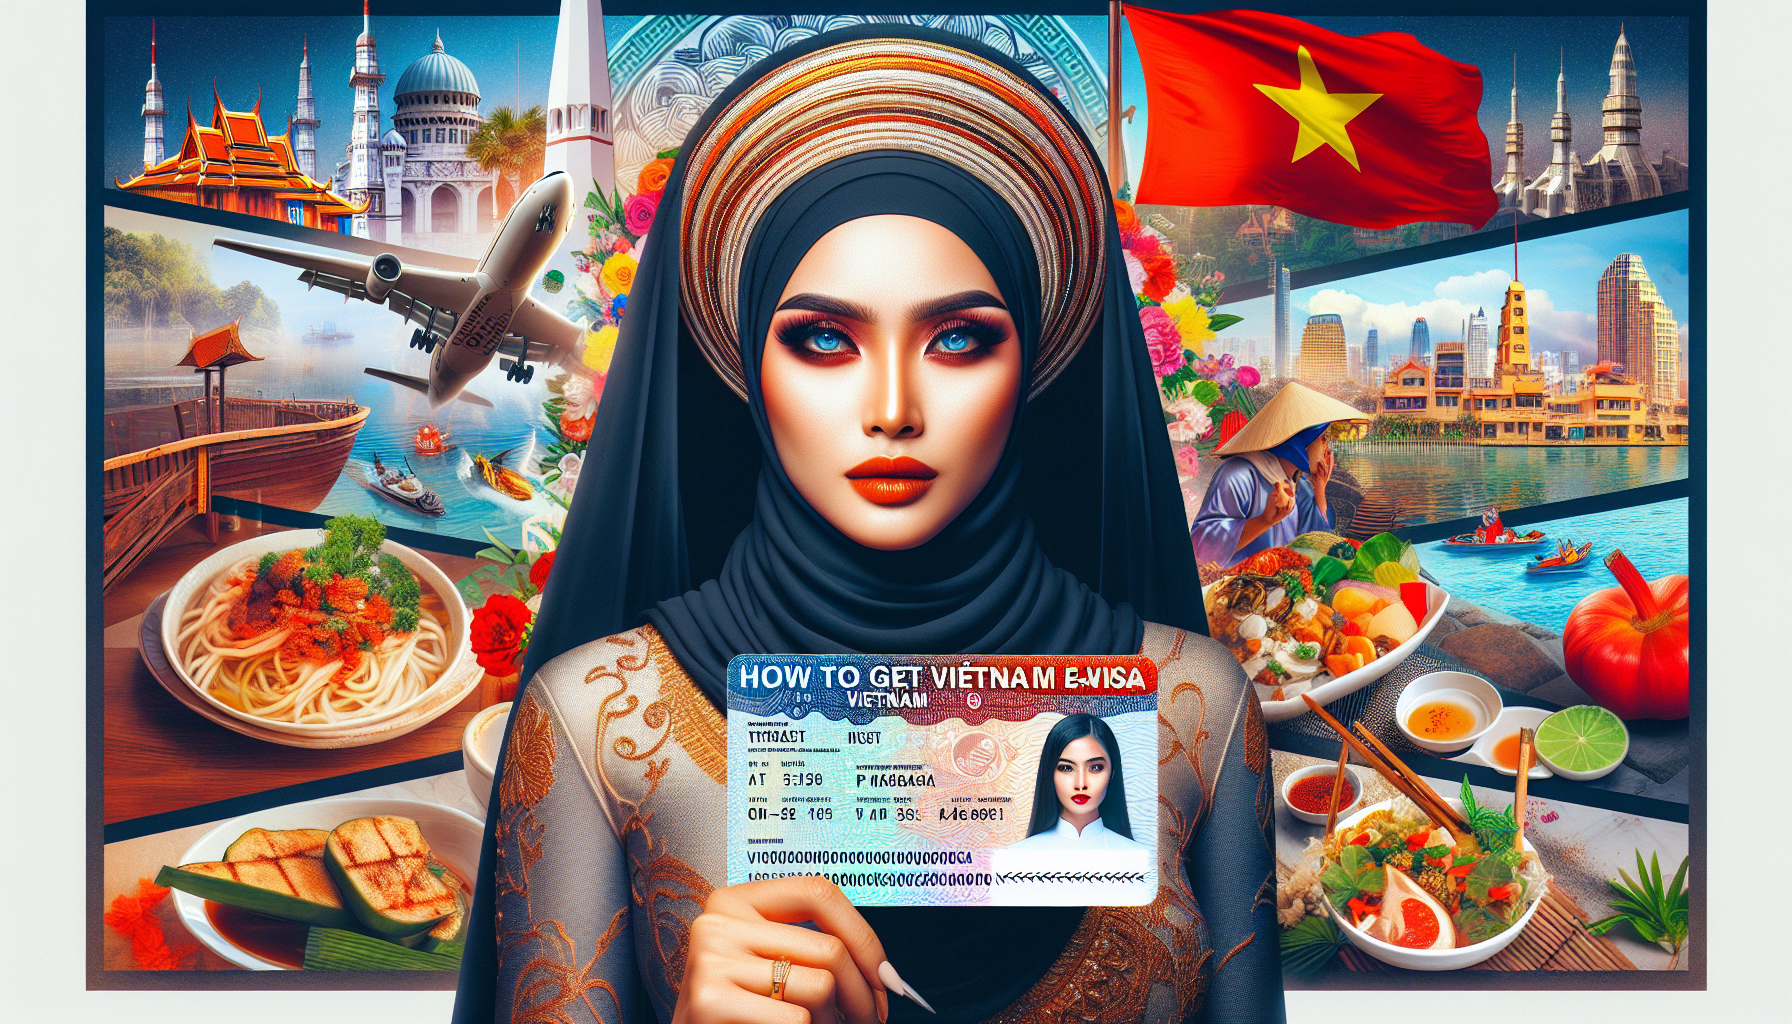 Vietnam Evisa for Citizens from Kuwait